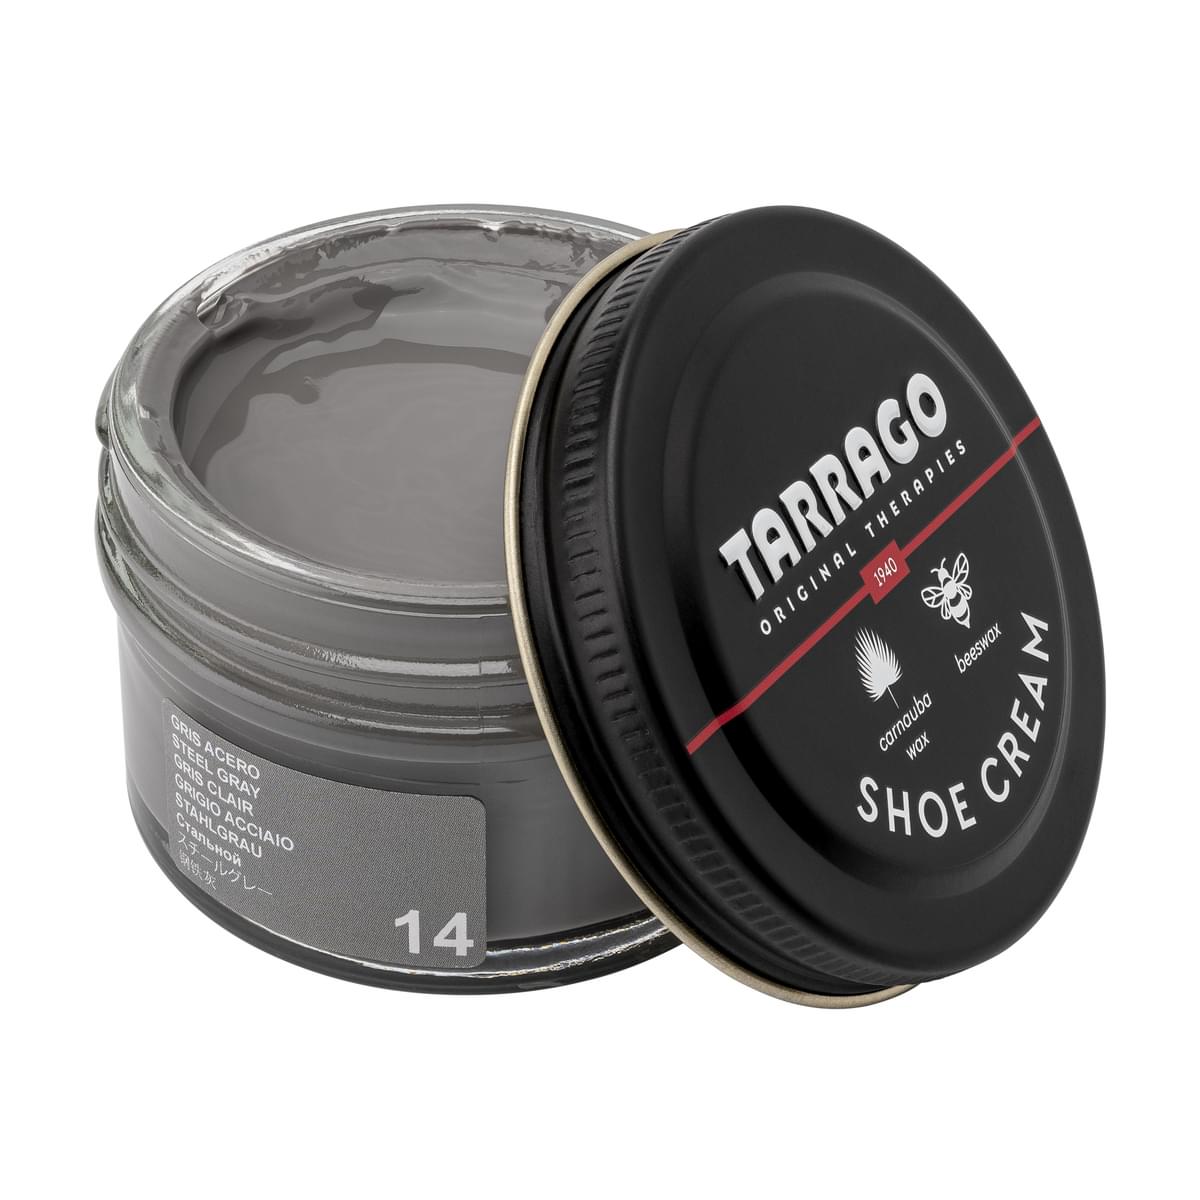 Tarrago Shoe Cream  - Steel Gray - 14